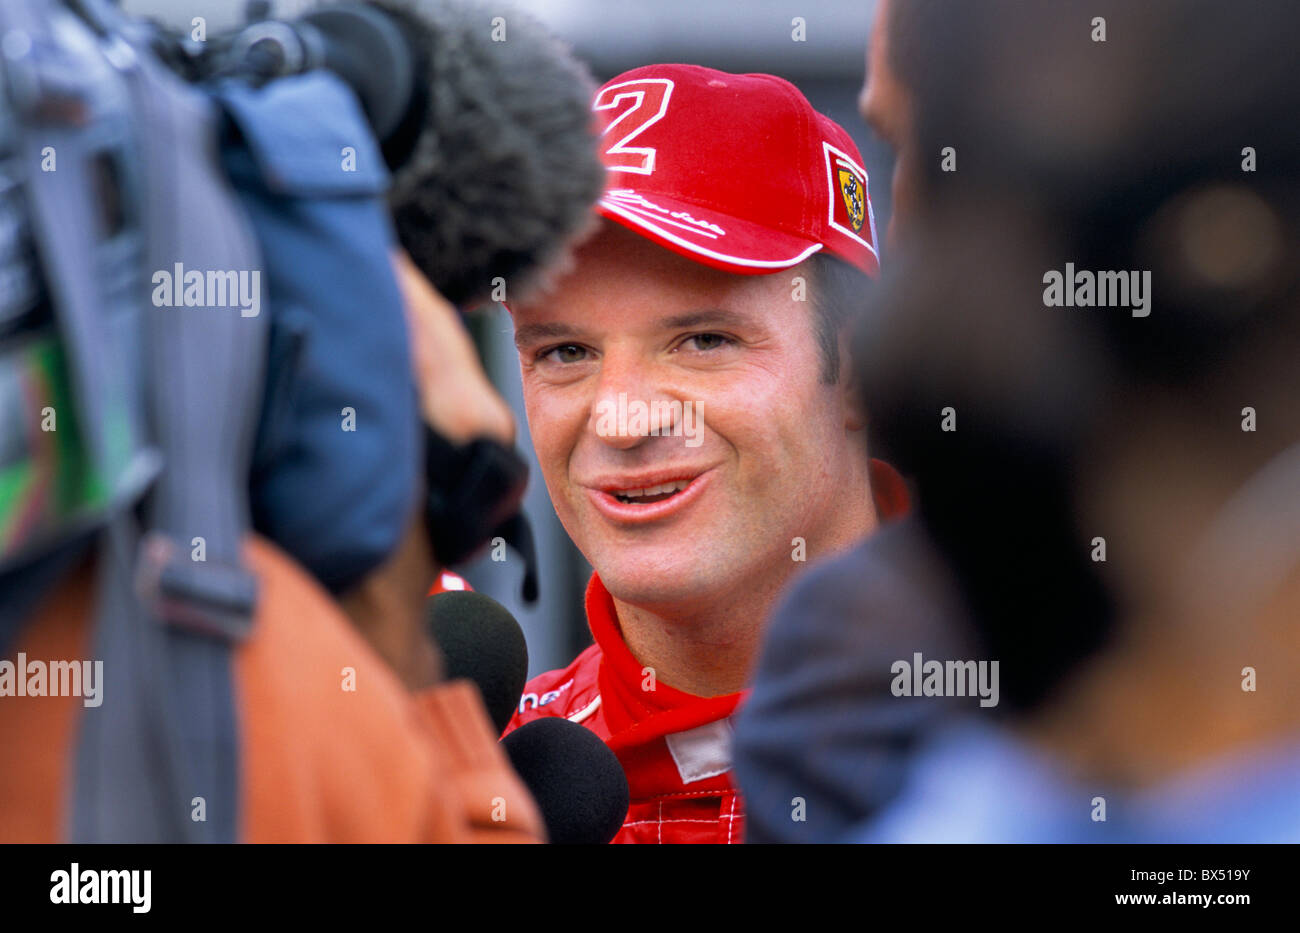 Formula 1 driver Rubens Barrichello giving an interview after winning the 2003 British Grand Prix. Stock Photo